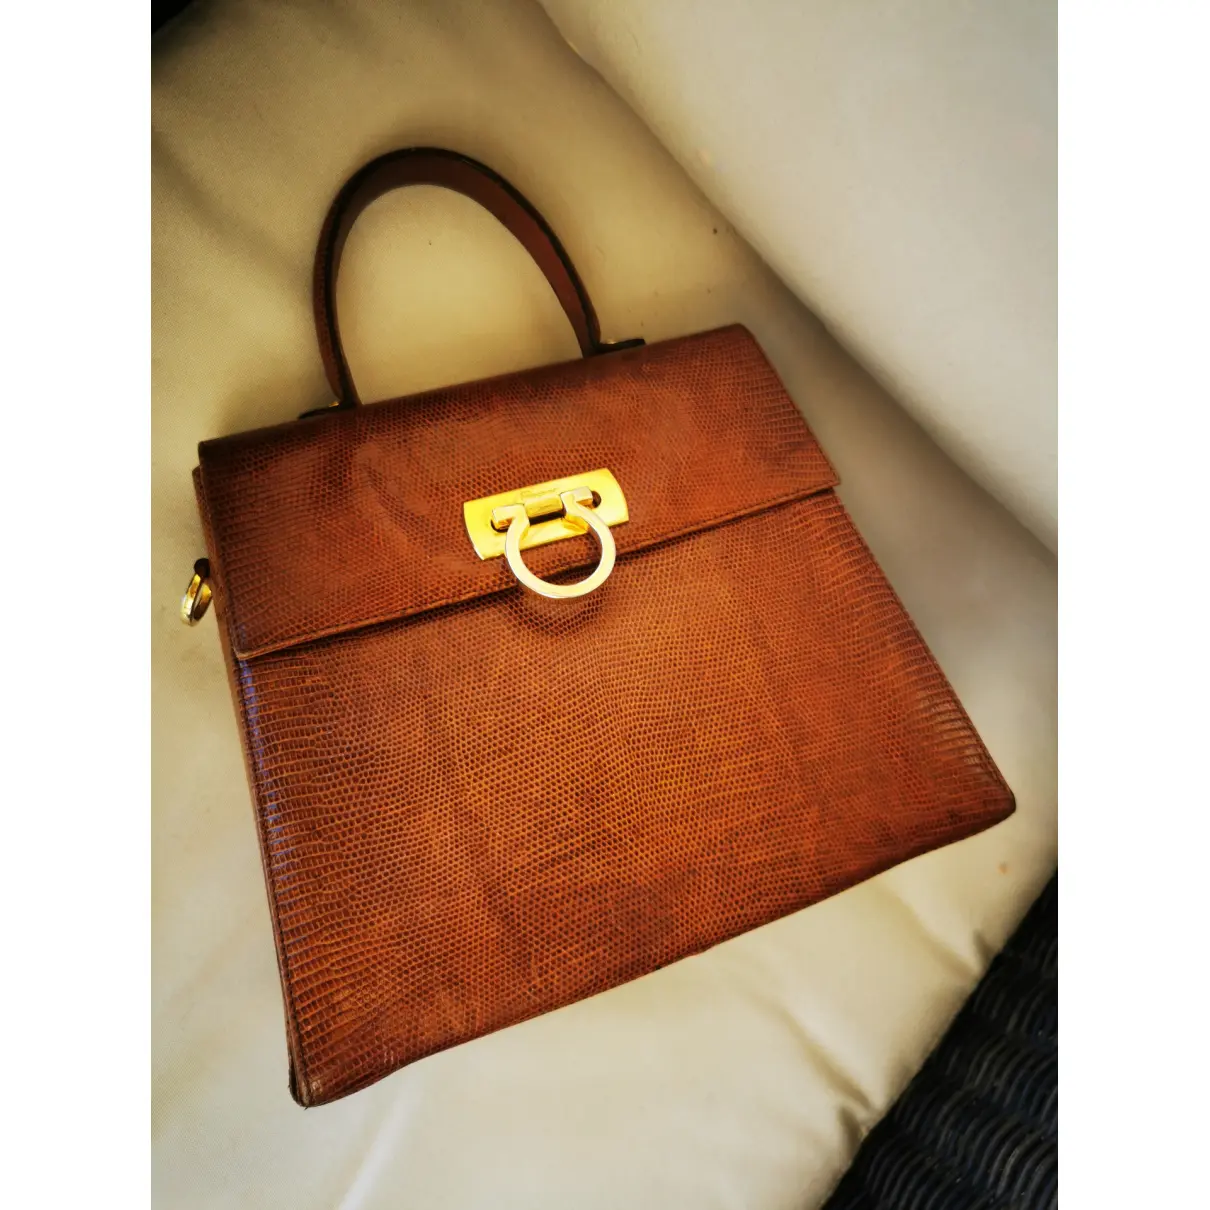 Buy Salvatore Ferragamo Sofia lizard handbag online